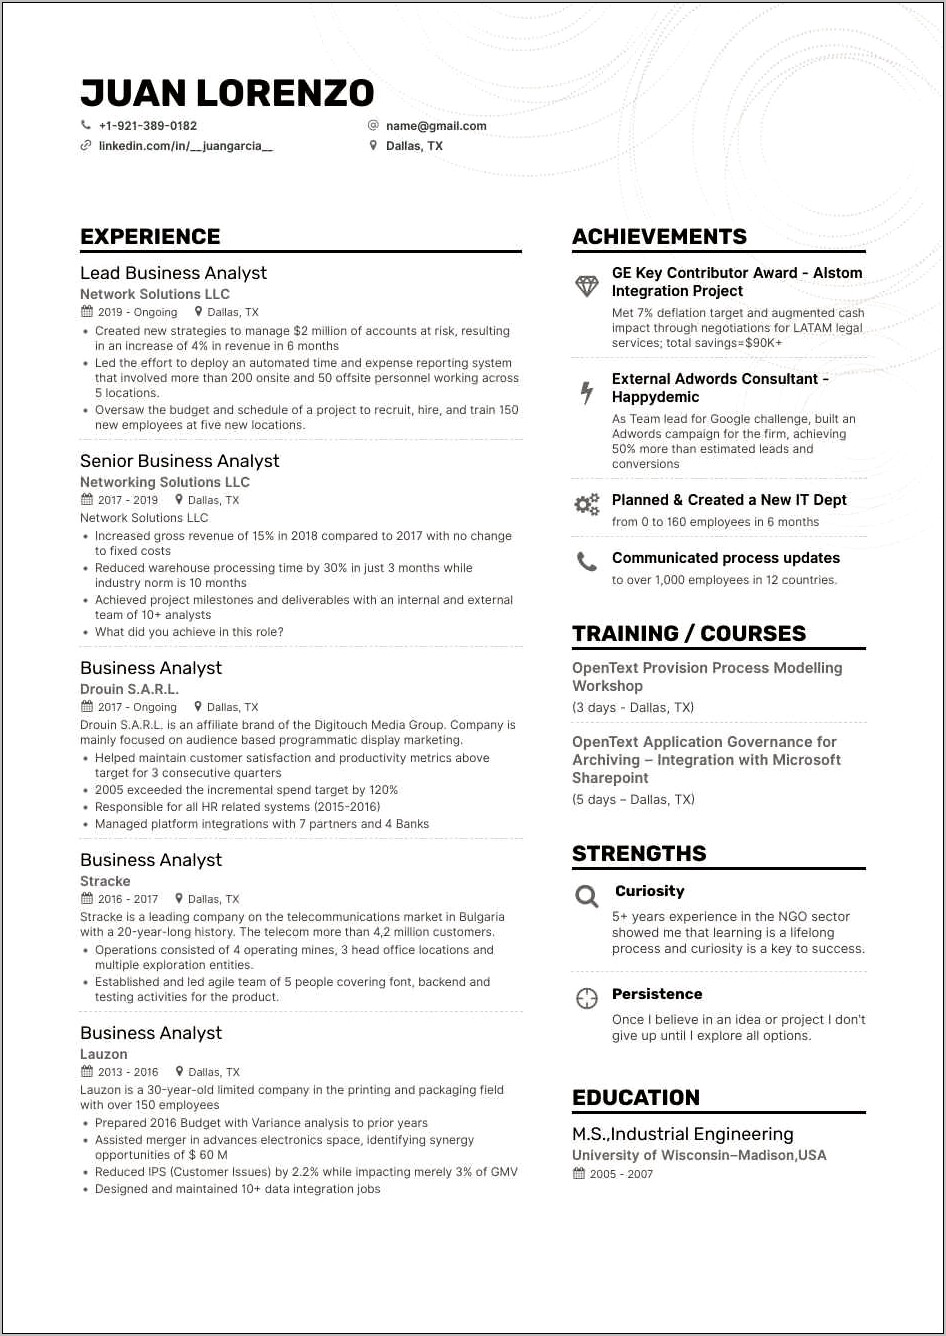 4 Years Experience Qa Analyst Resume Format